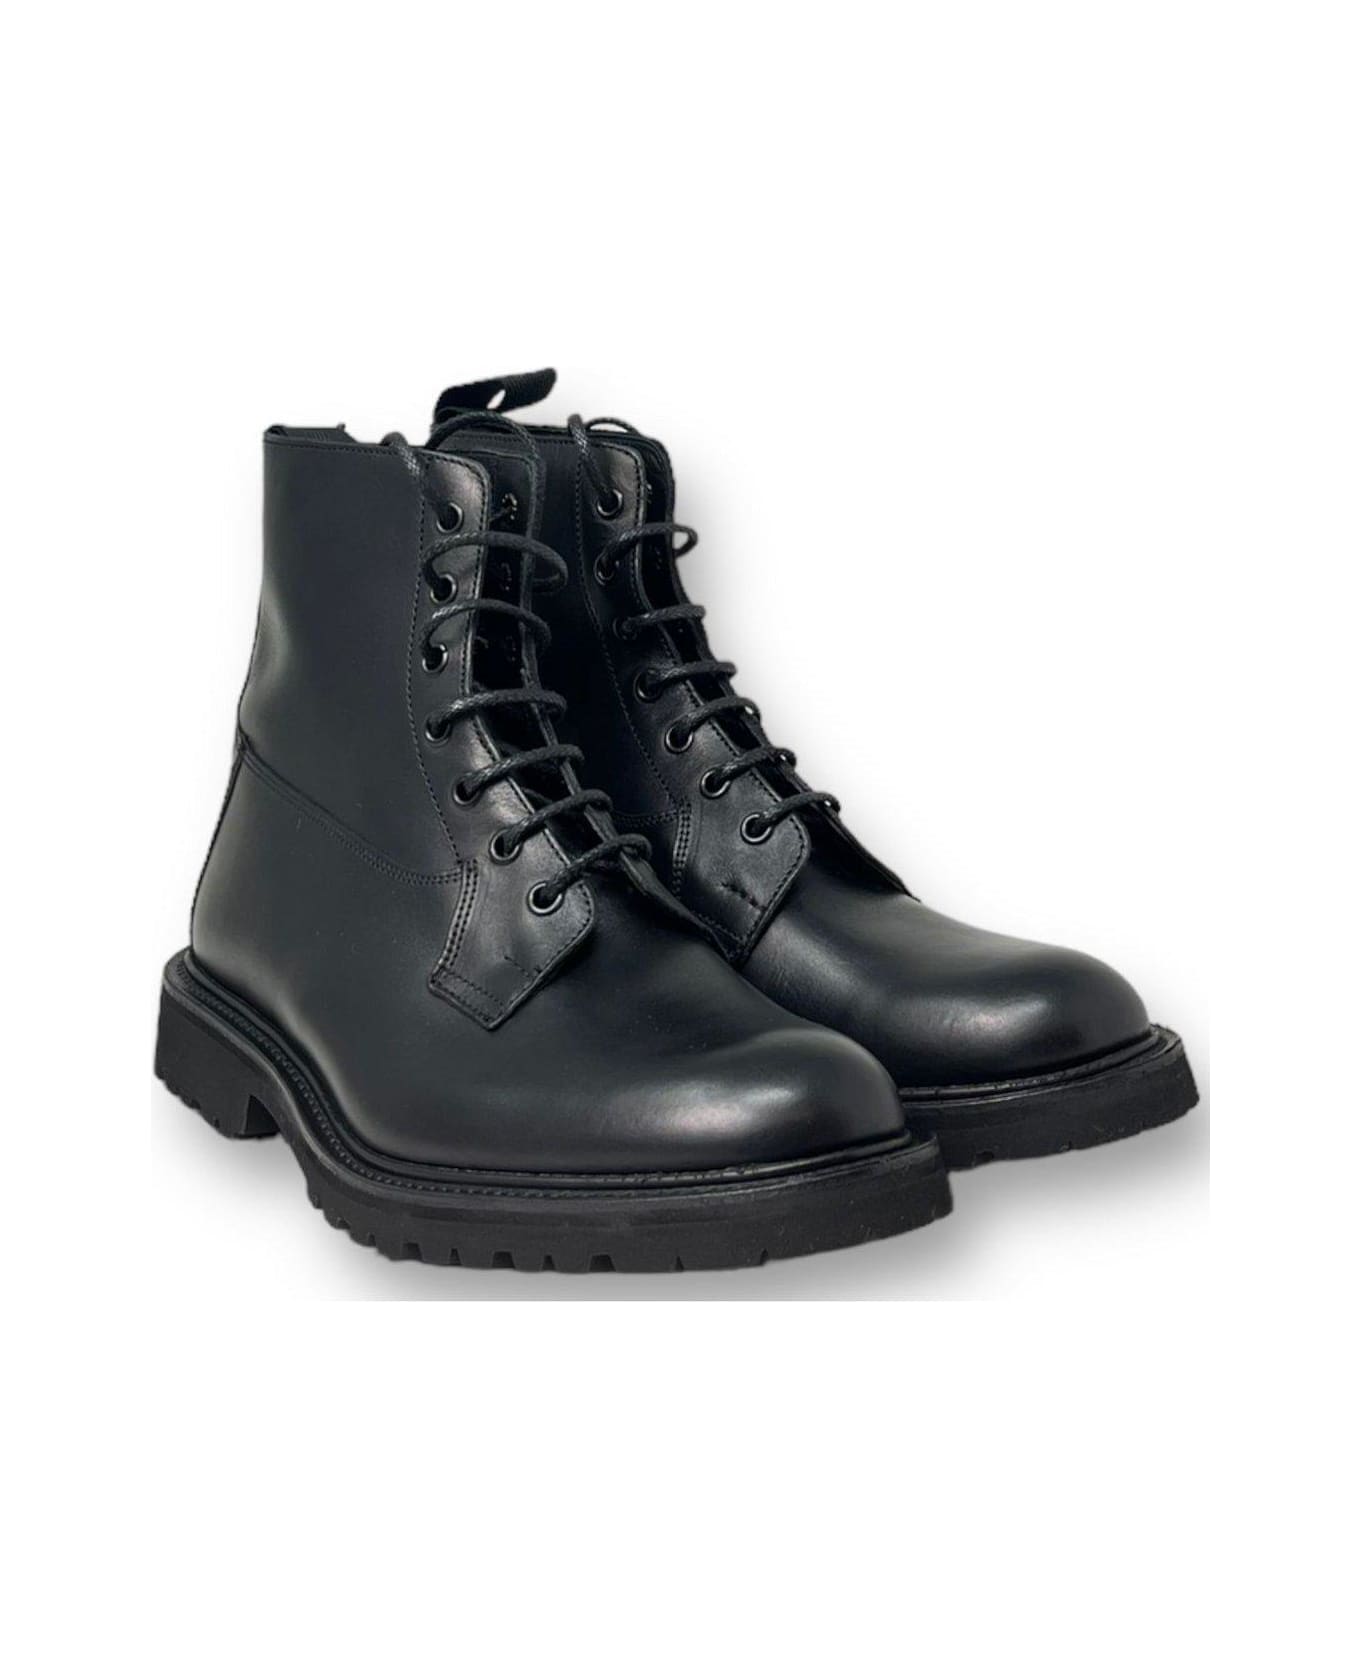 Tricker's Burford Plain Derby Boot Boots - BLACK ブーツ